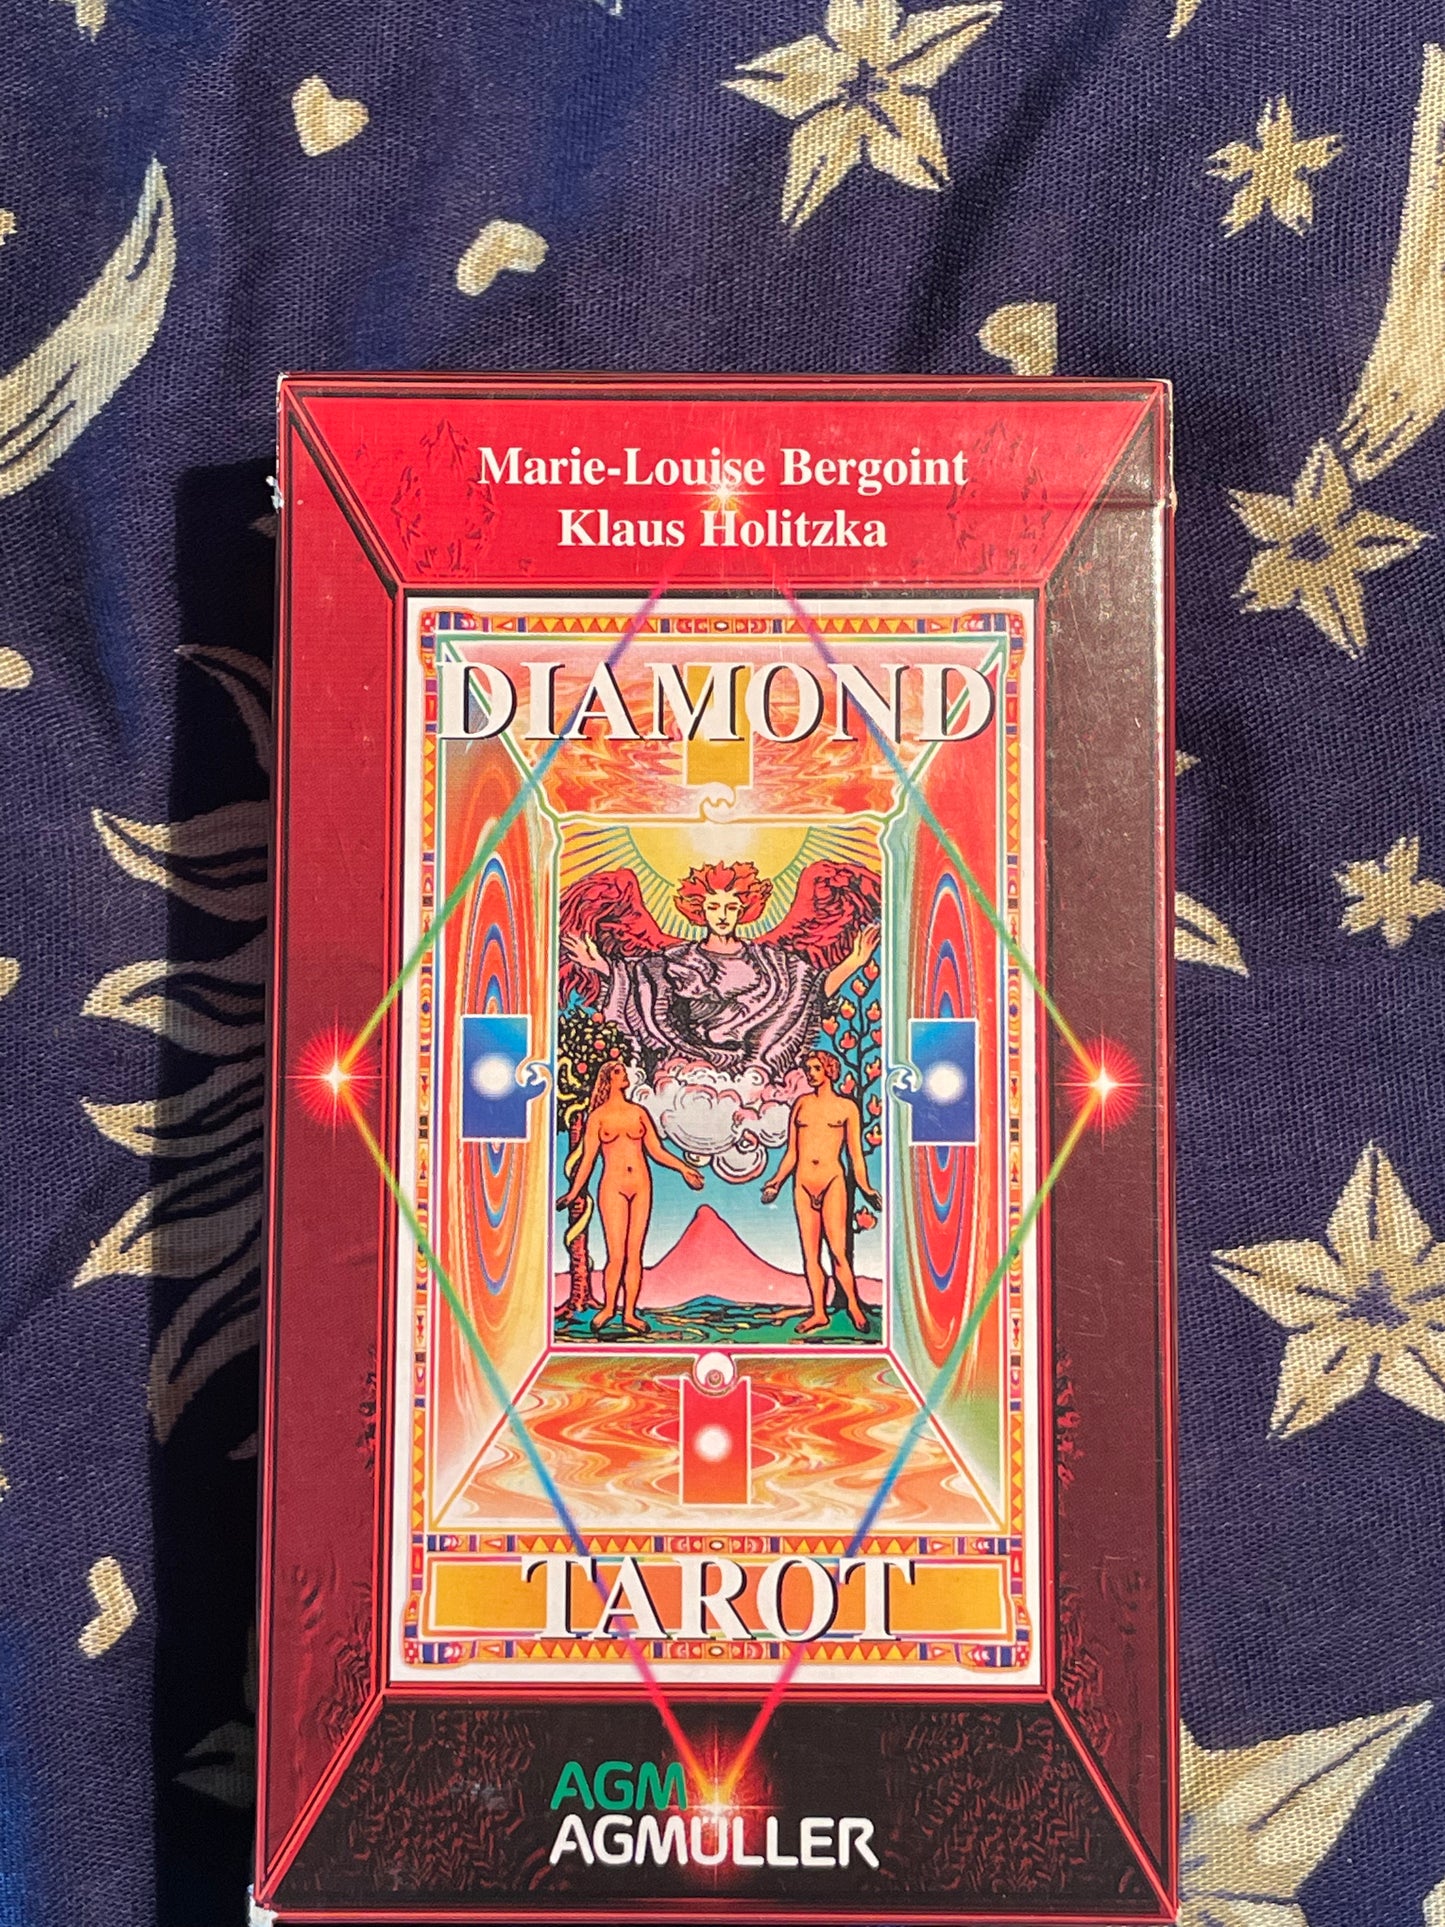 Vintage Diamond Tarot